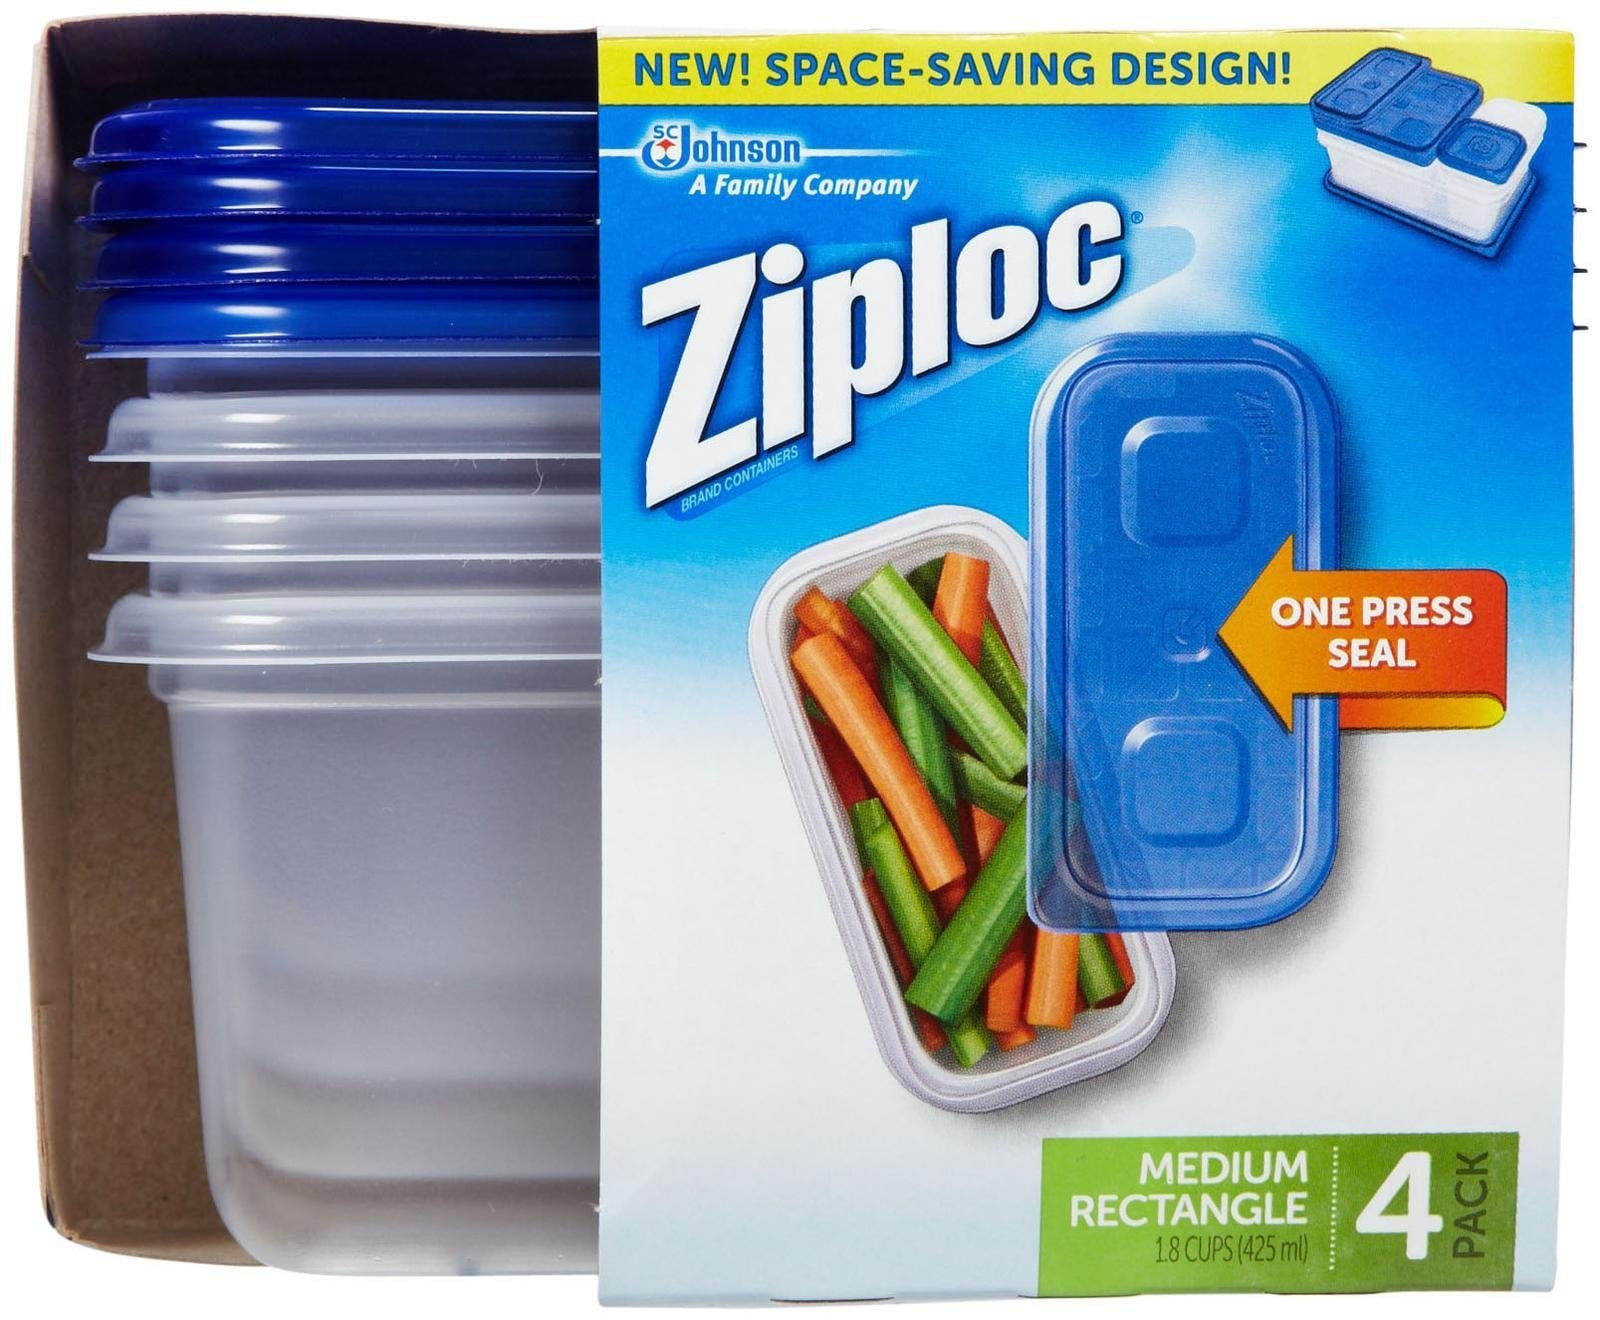 Ziploc Medium Round Containers & Lids - 3 CT Ziploc(25700709336): customers  reviews @